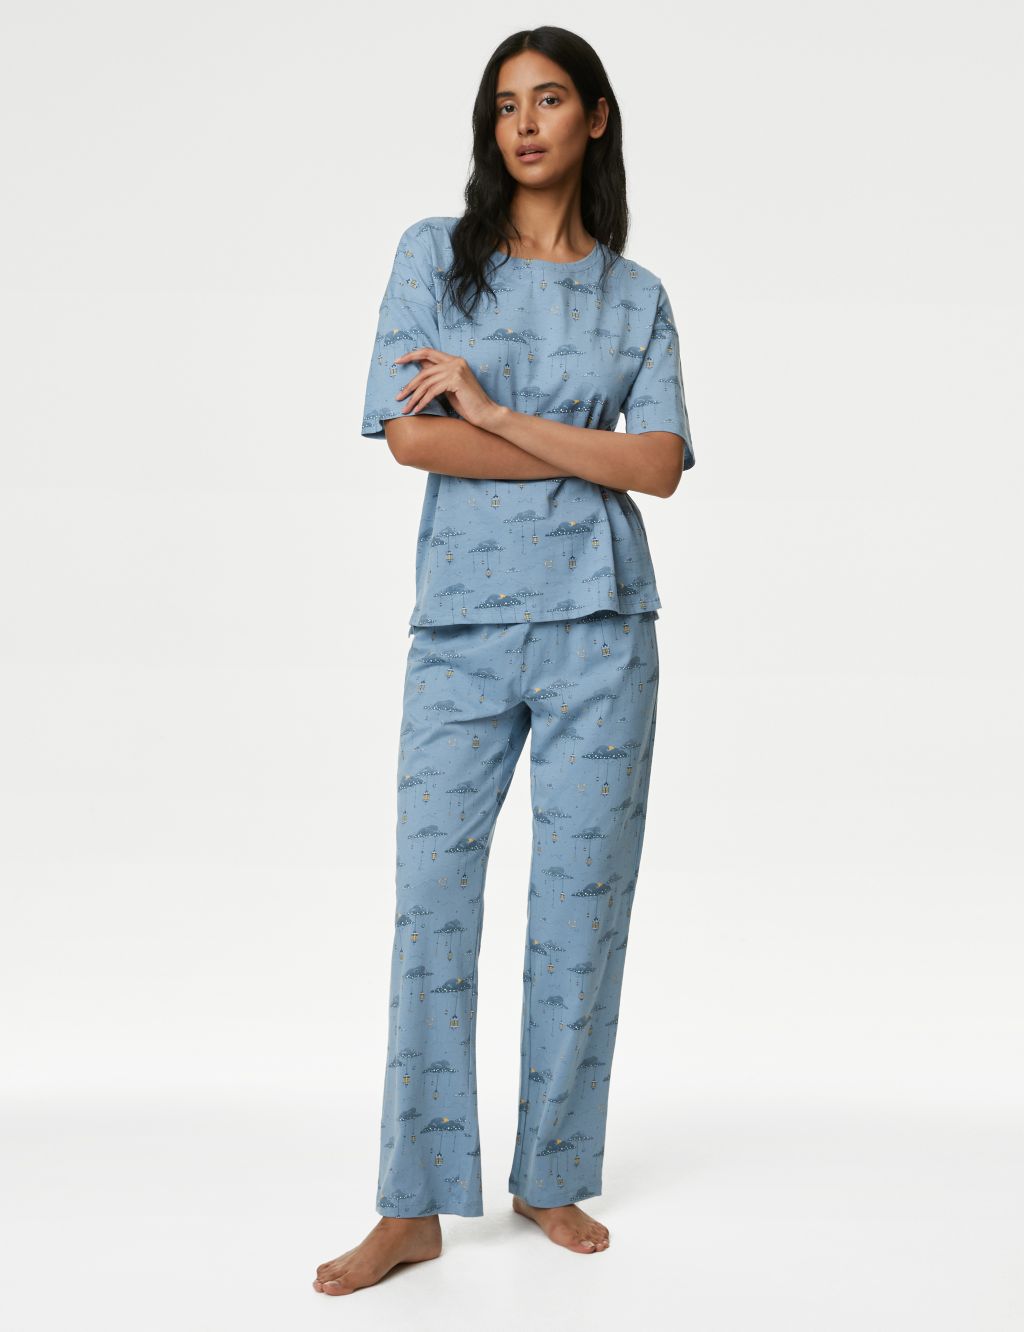 M&S Ladies Thermal Pajama T32/5119 – Saffana